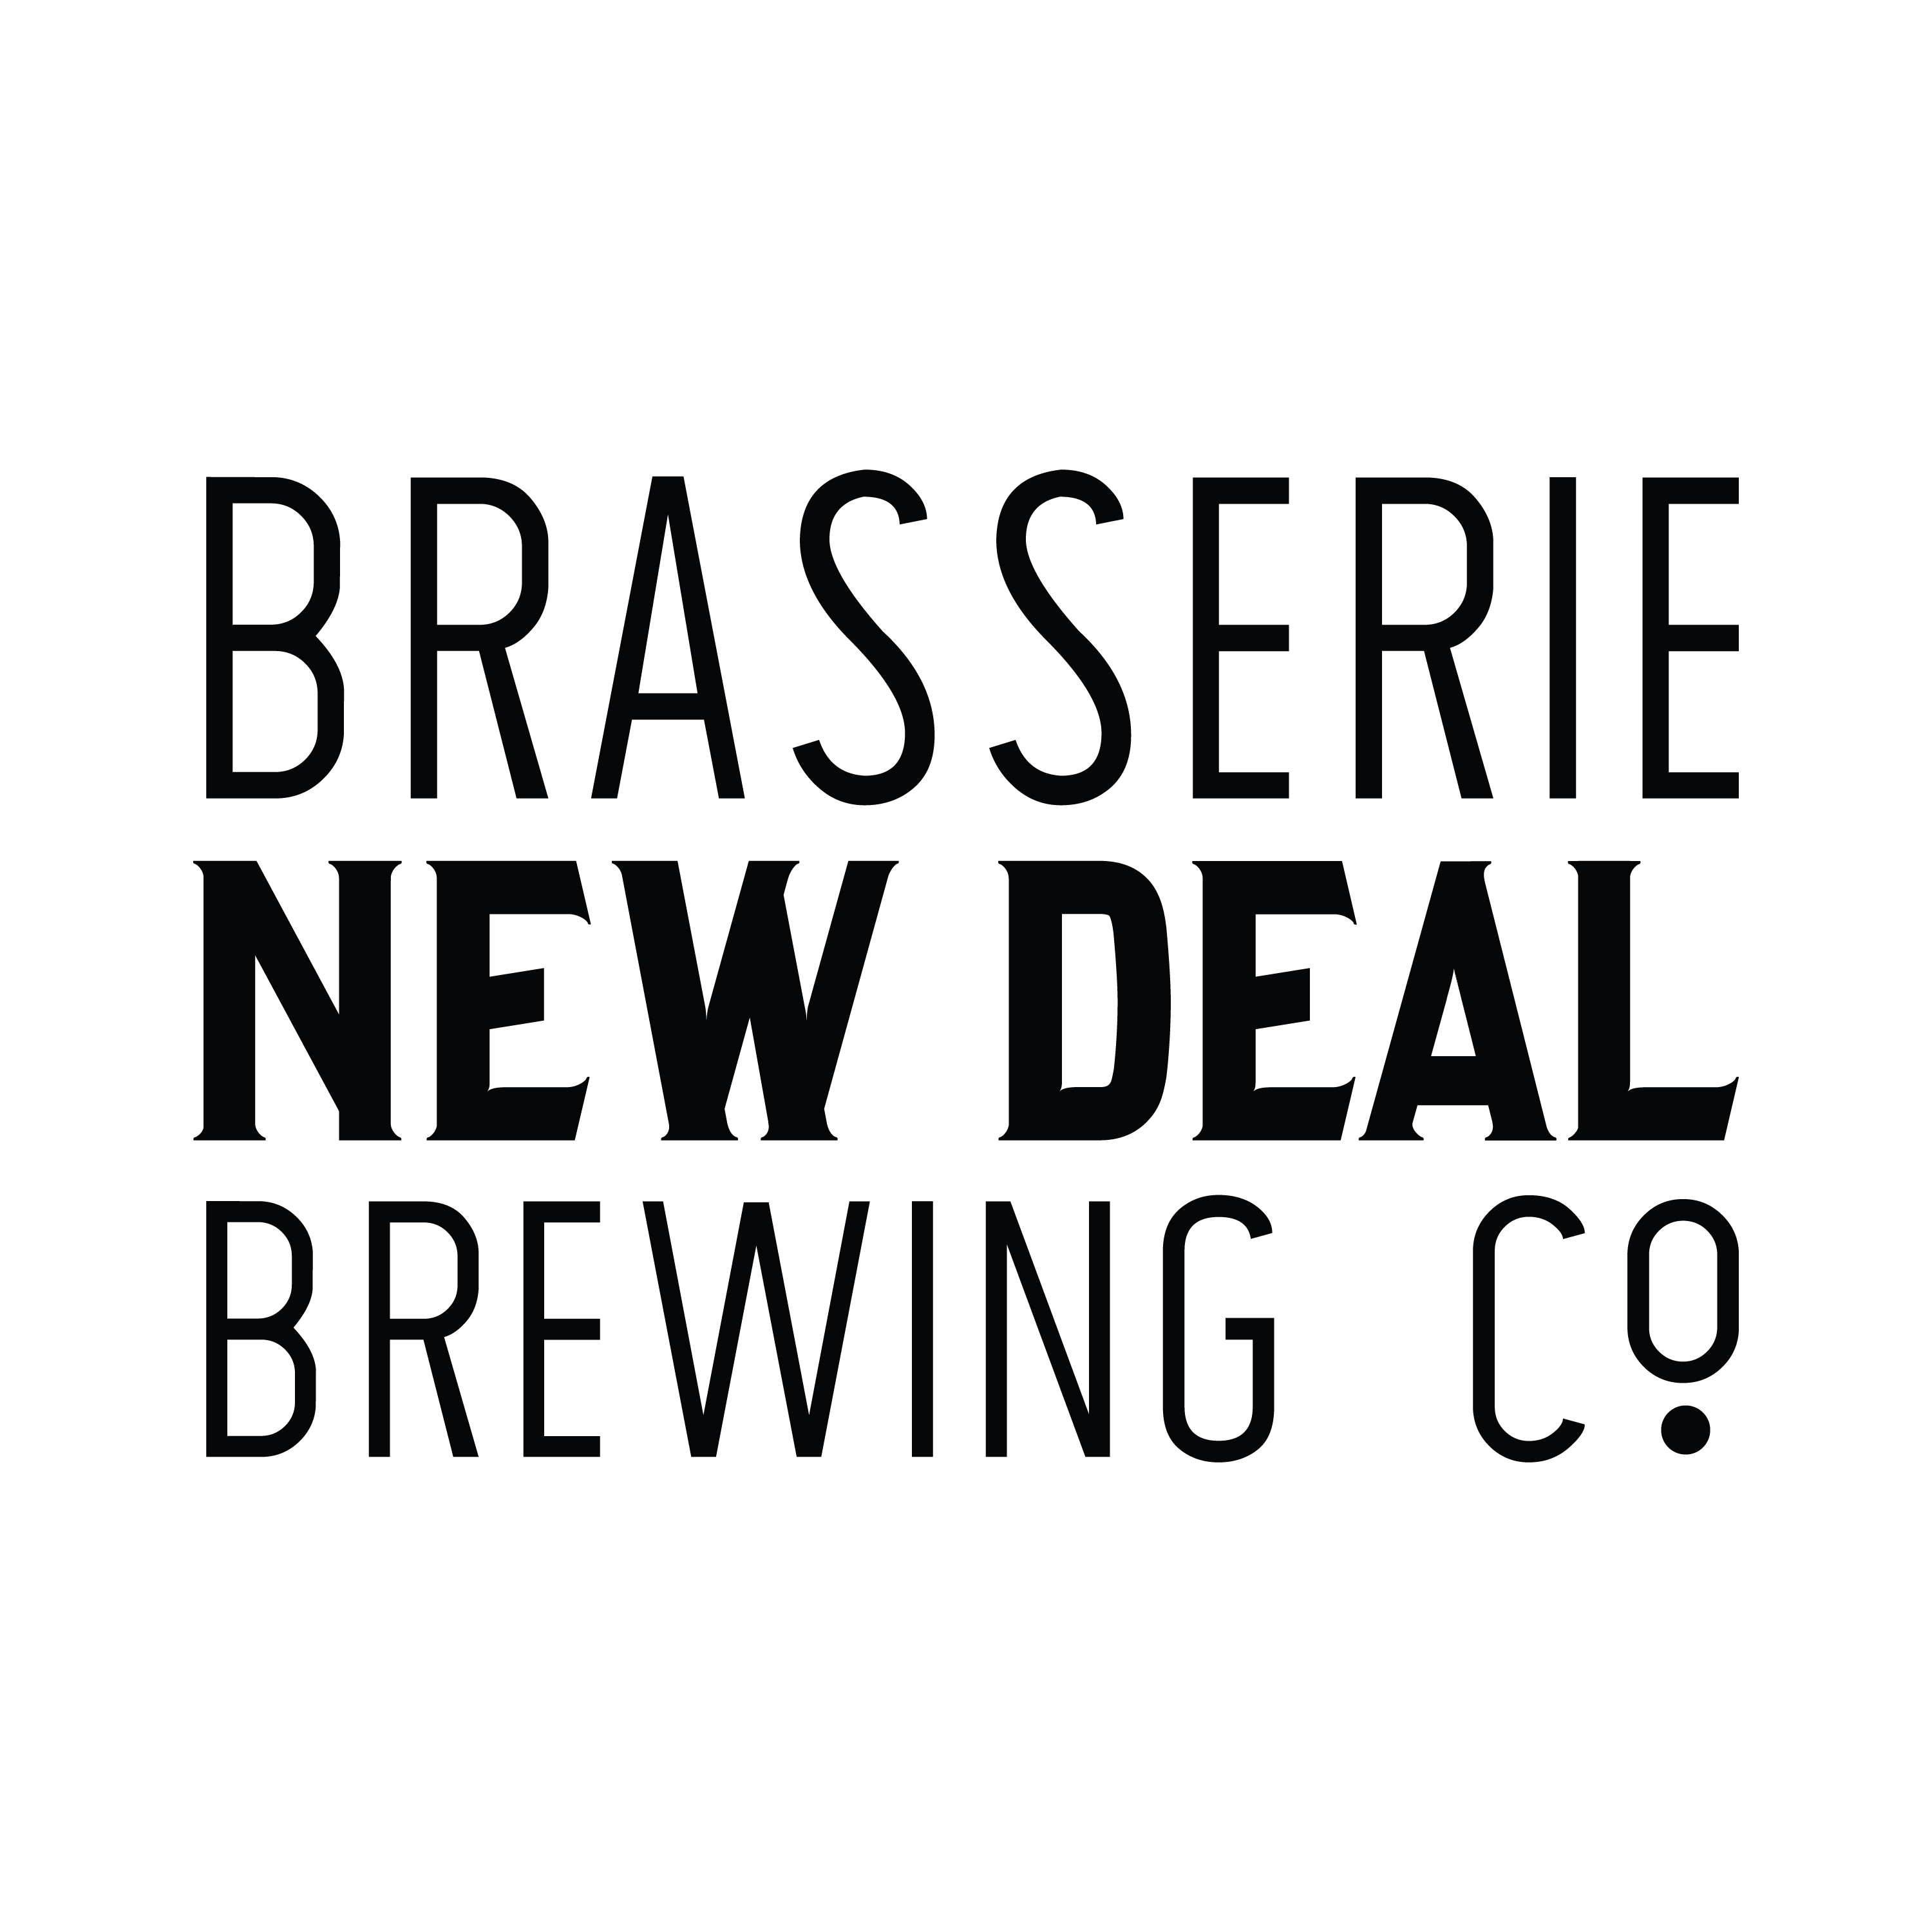 Brasserie New Deal Brewing Co